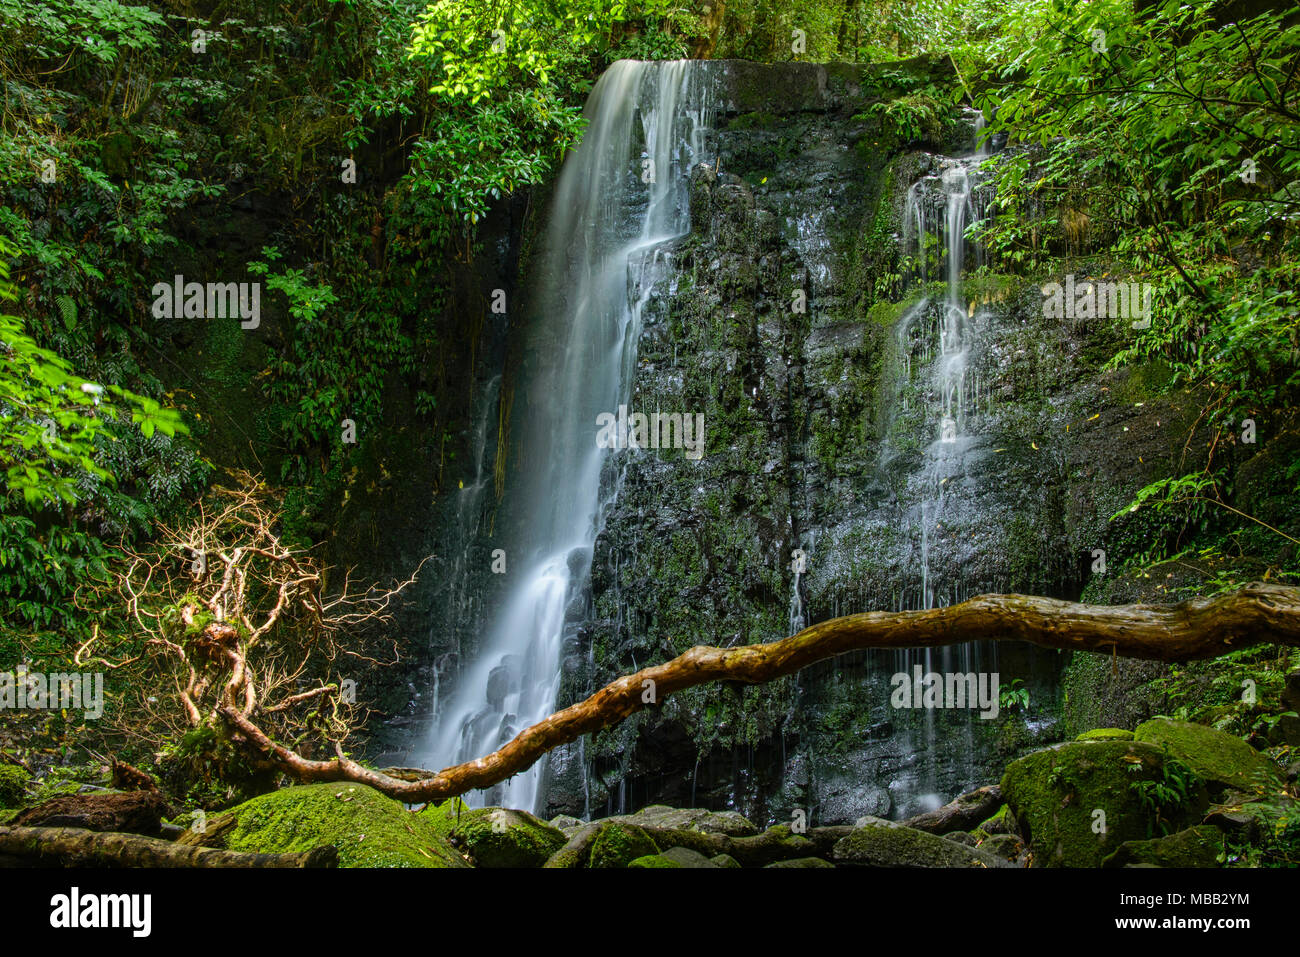 Matai Falls in the Catlins, New Zealand Stock Photo